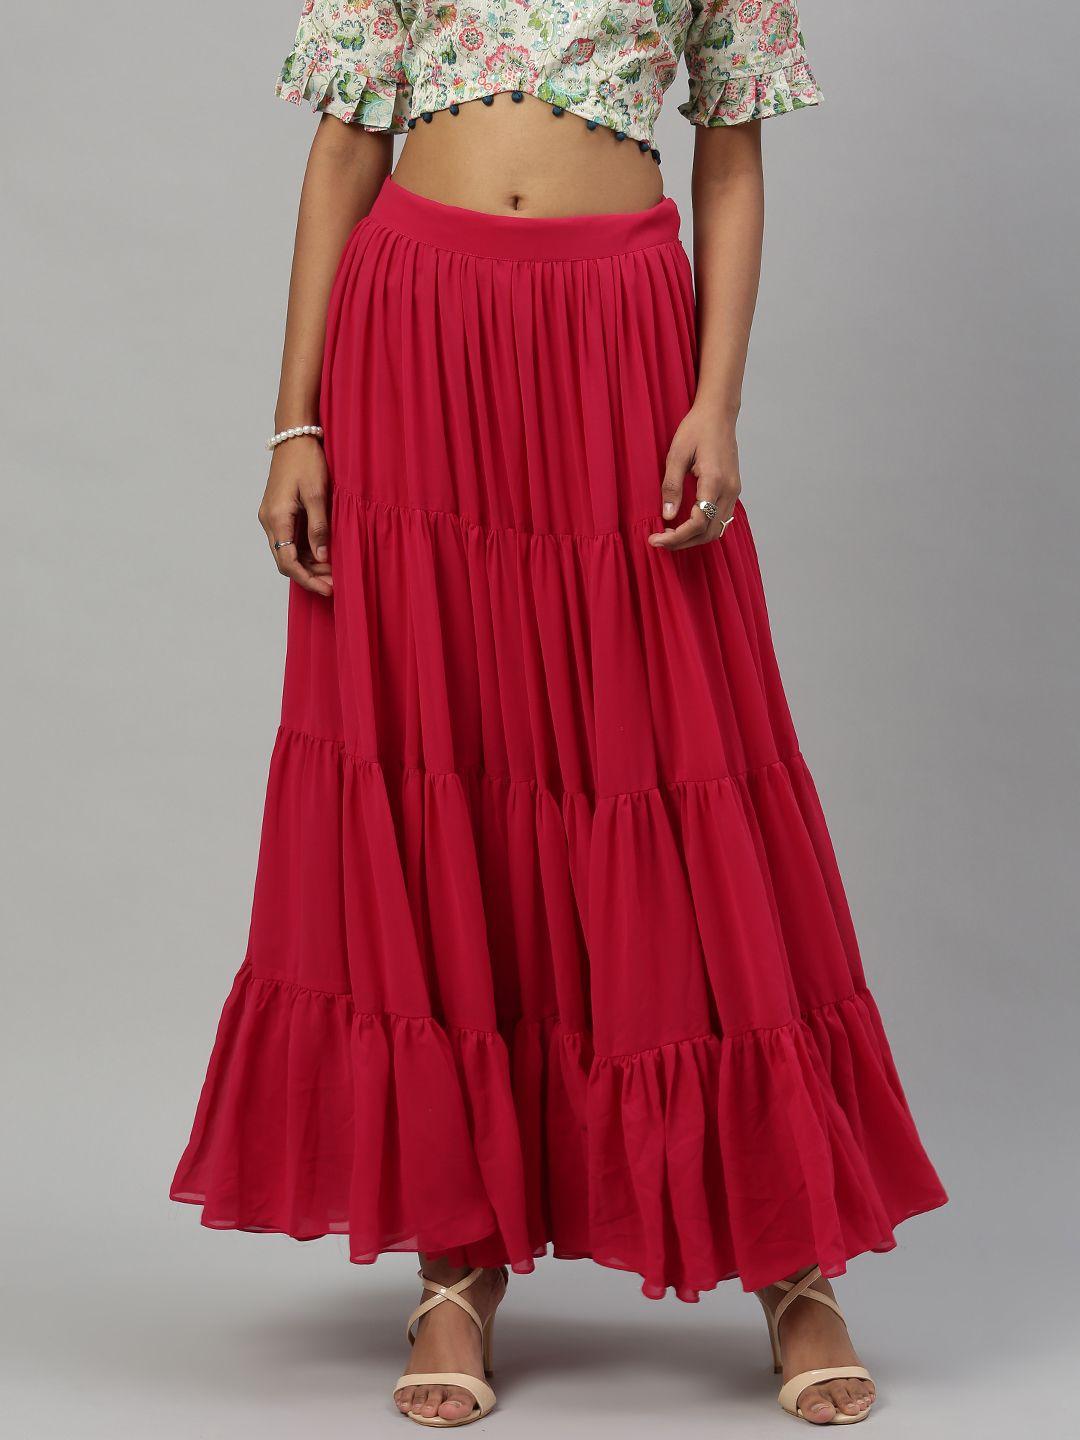 inddus-women-magenta-pink-solid-georgette-ruffle-tiered-skirt